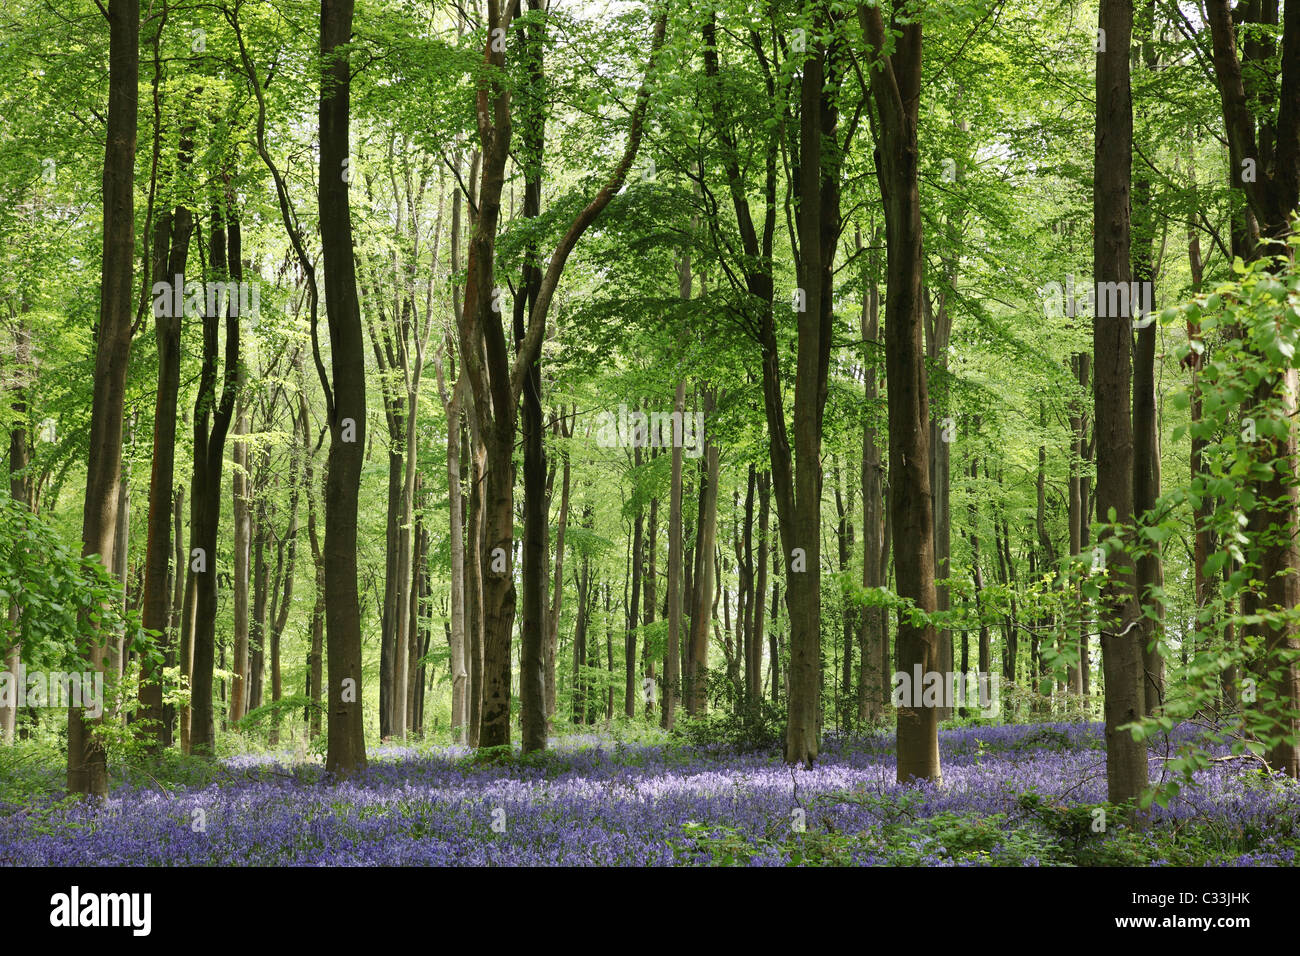 Bluebells flowering in West Woods bluebell wood during spring, Marlborough, Wiltshire, England, UK Stock Photo